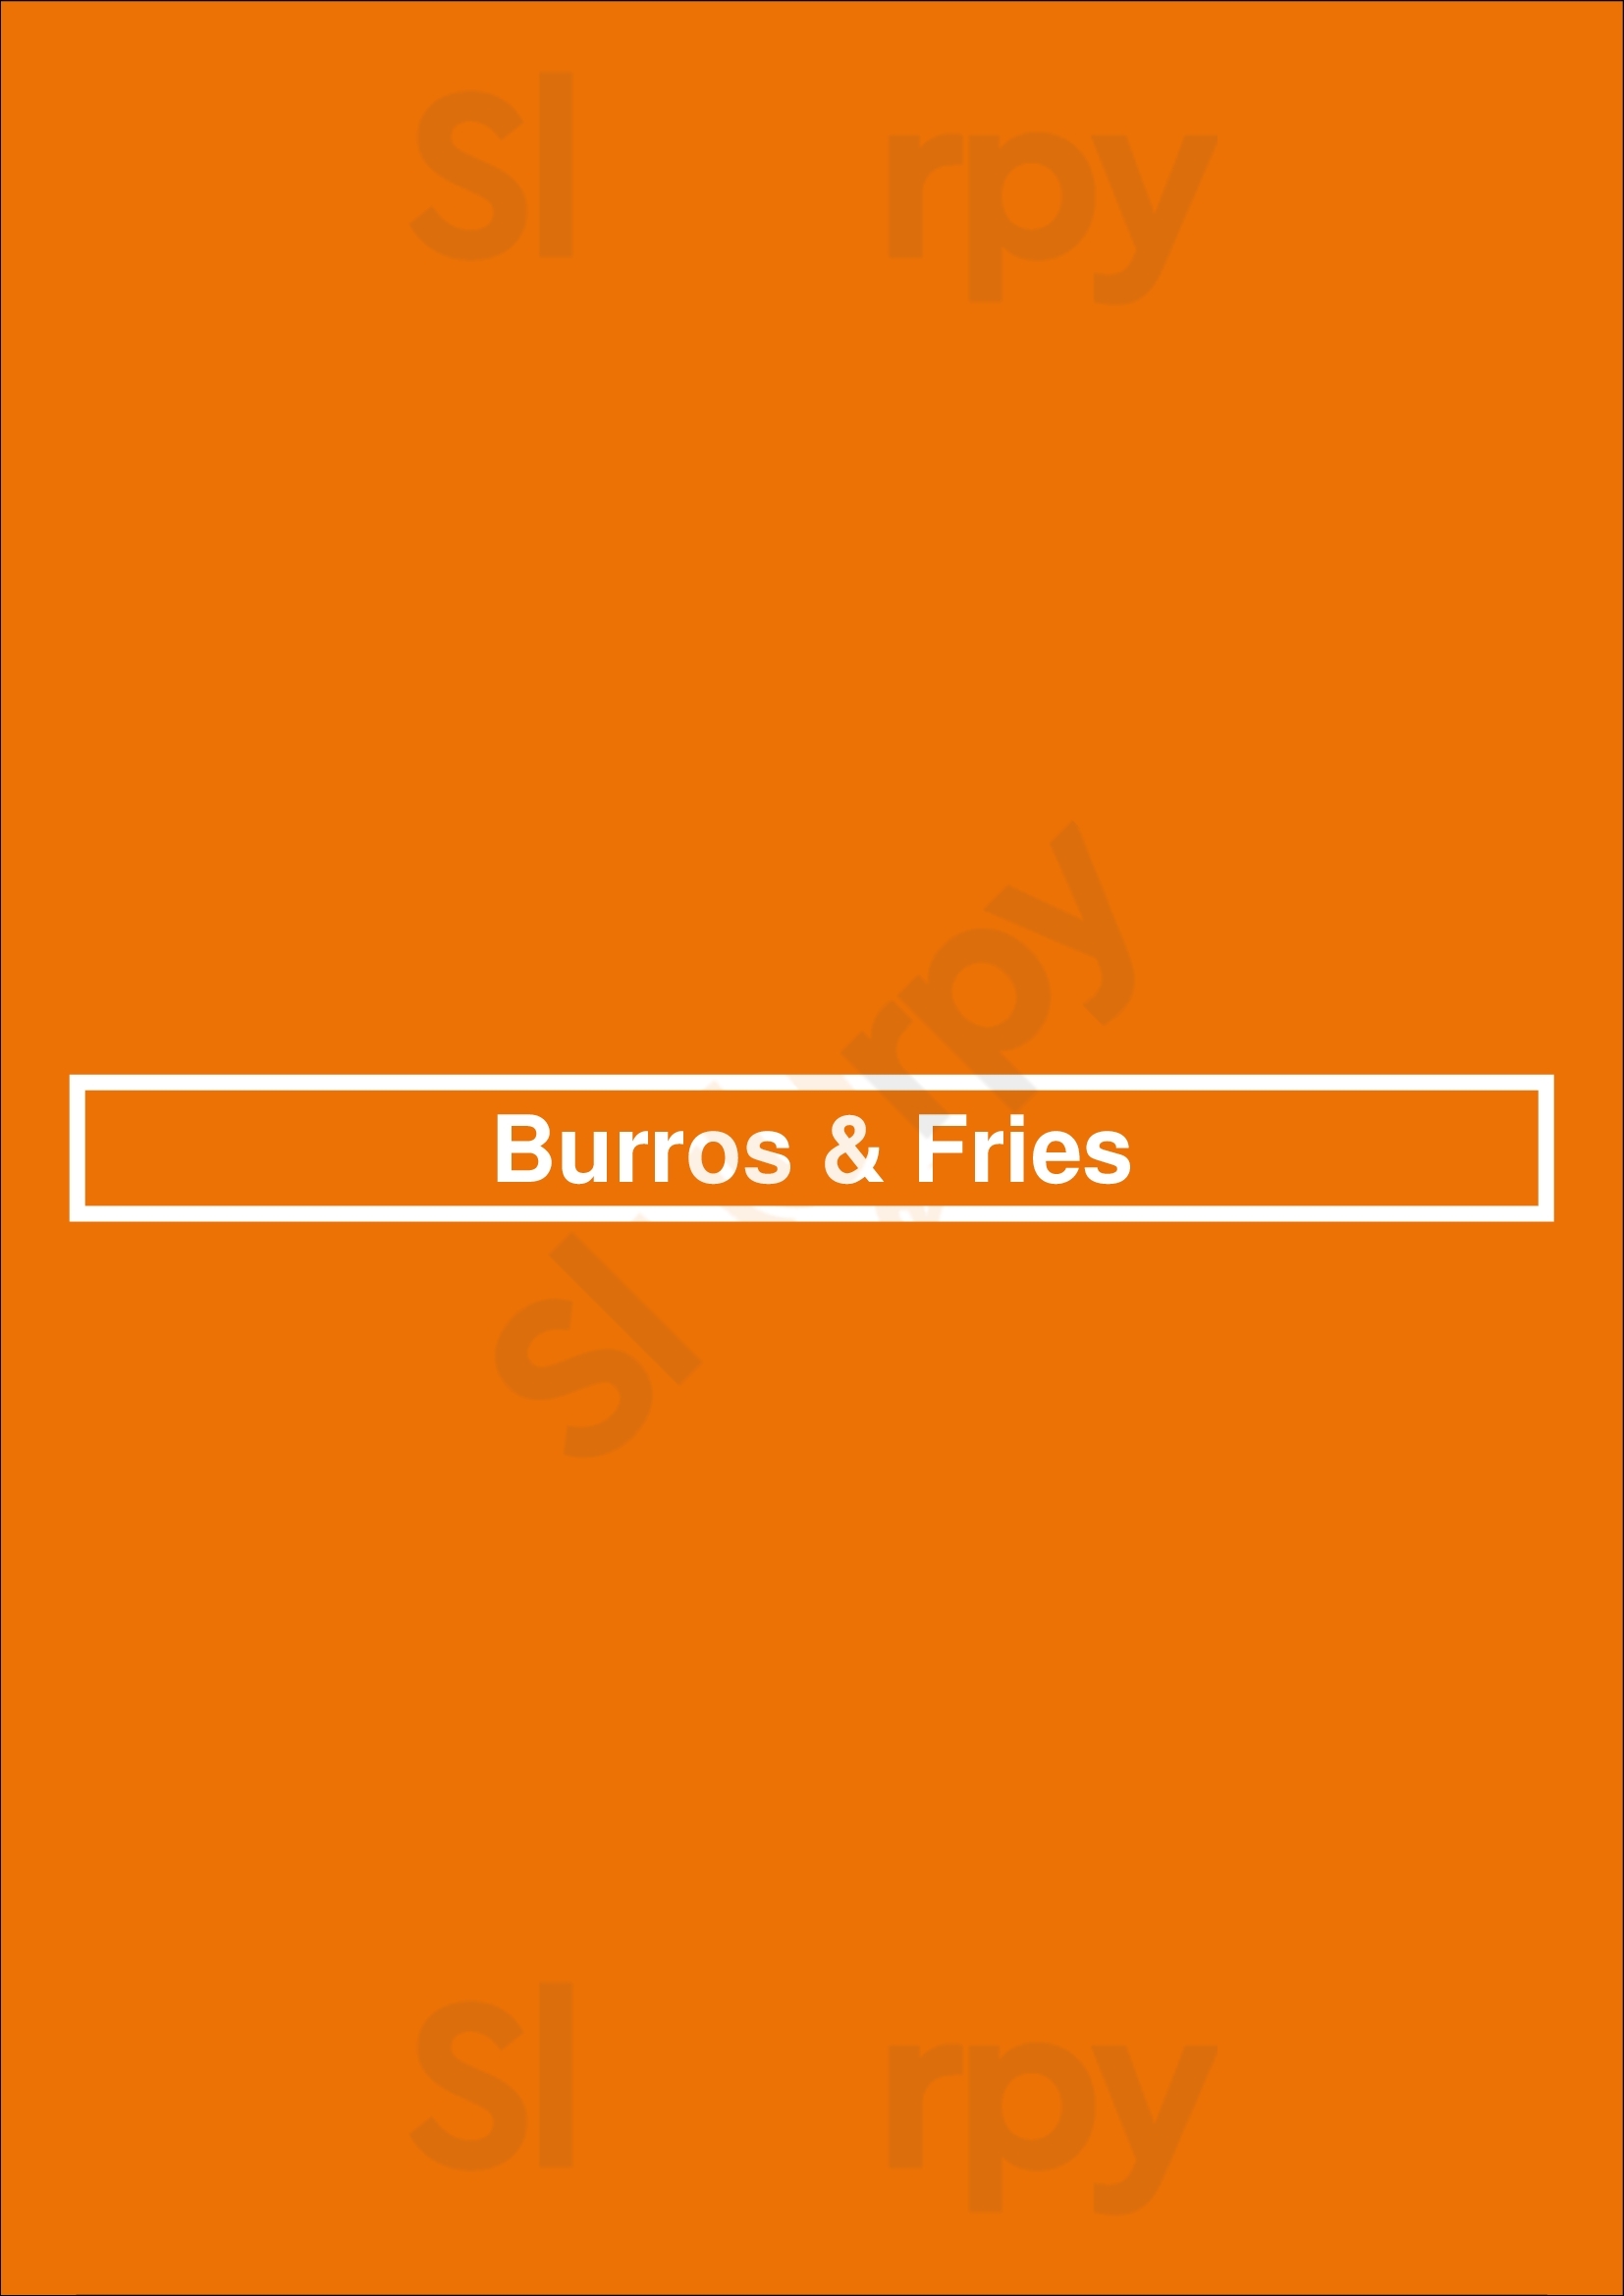 Burros & Fries La Jolla Menu - 1